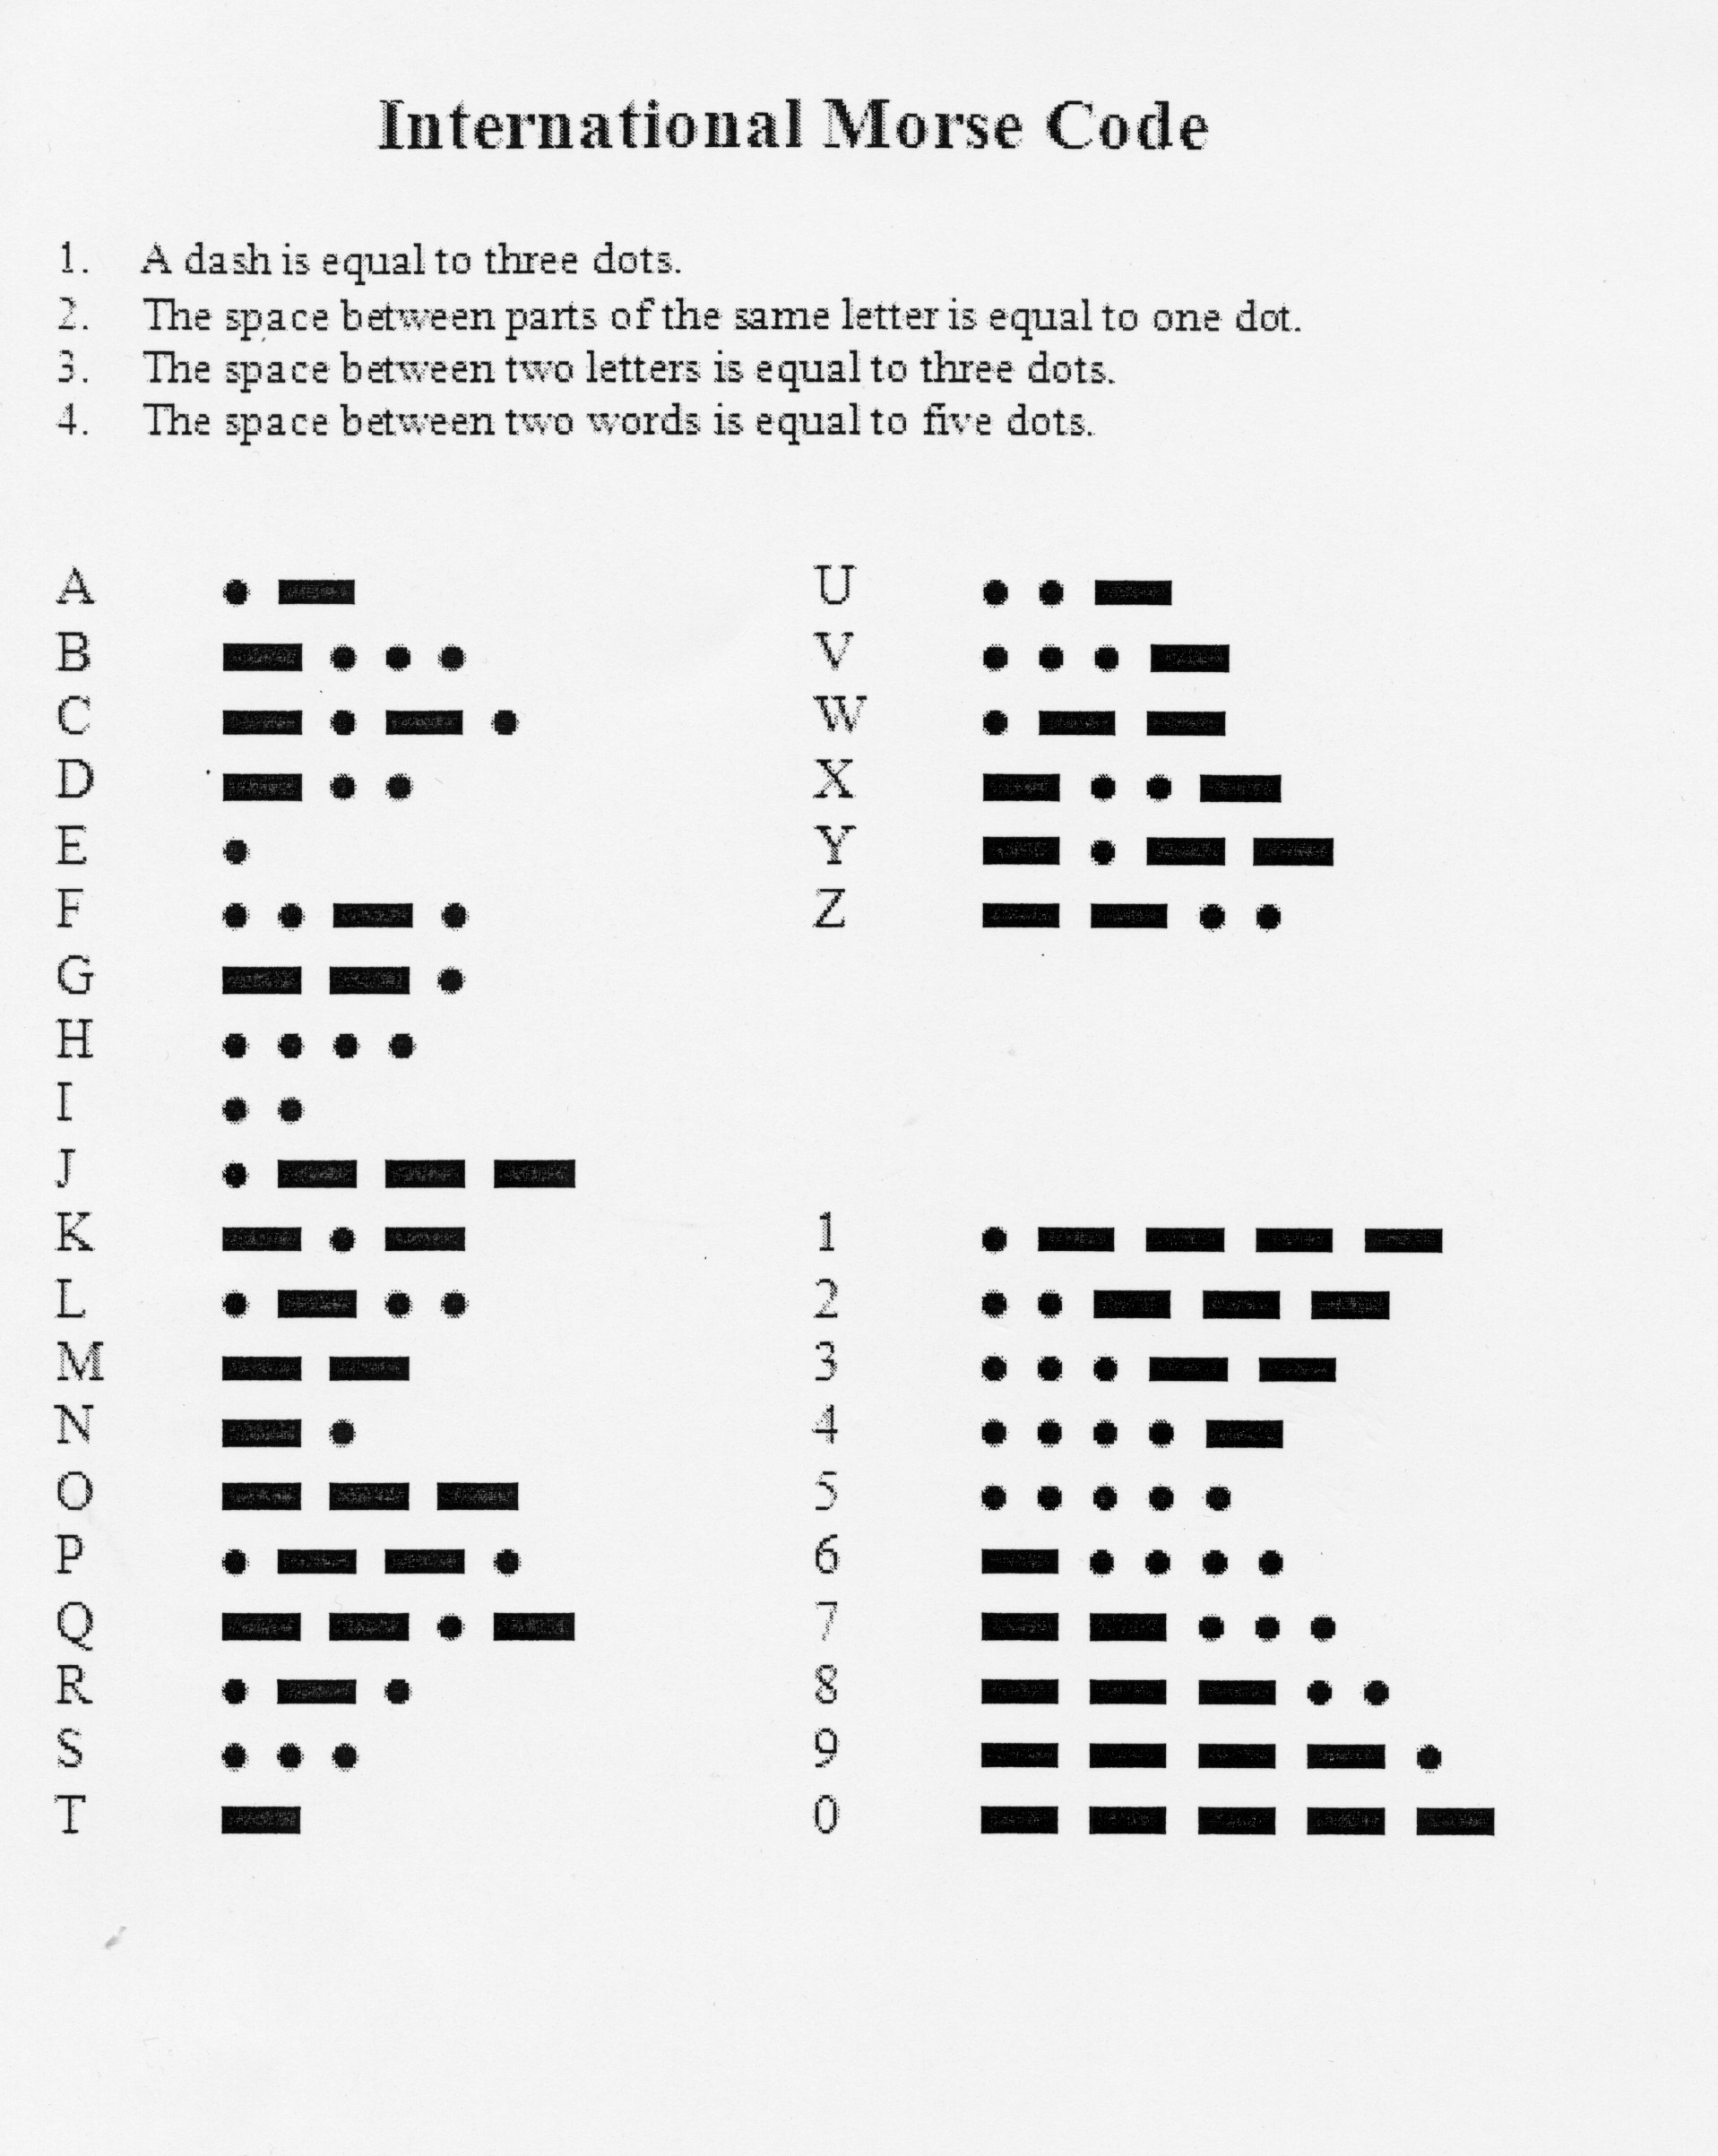 Morse code Dictionary